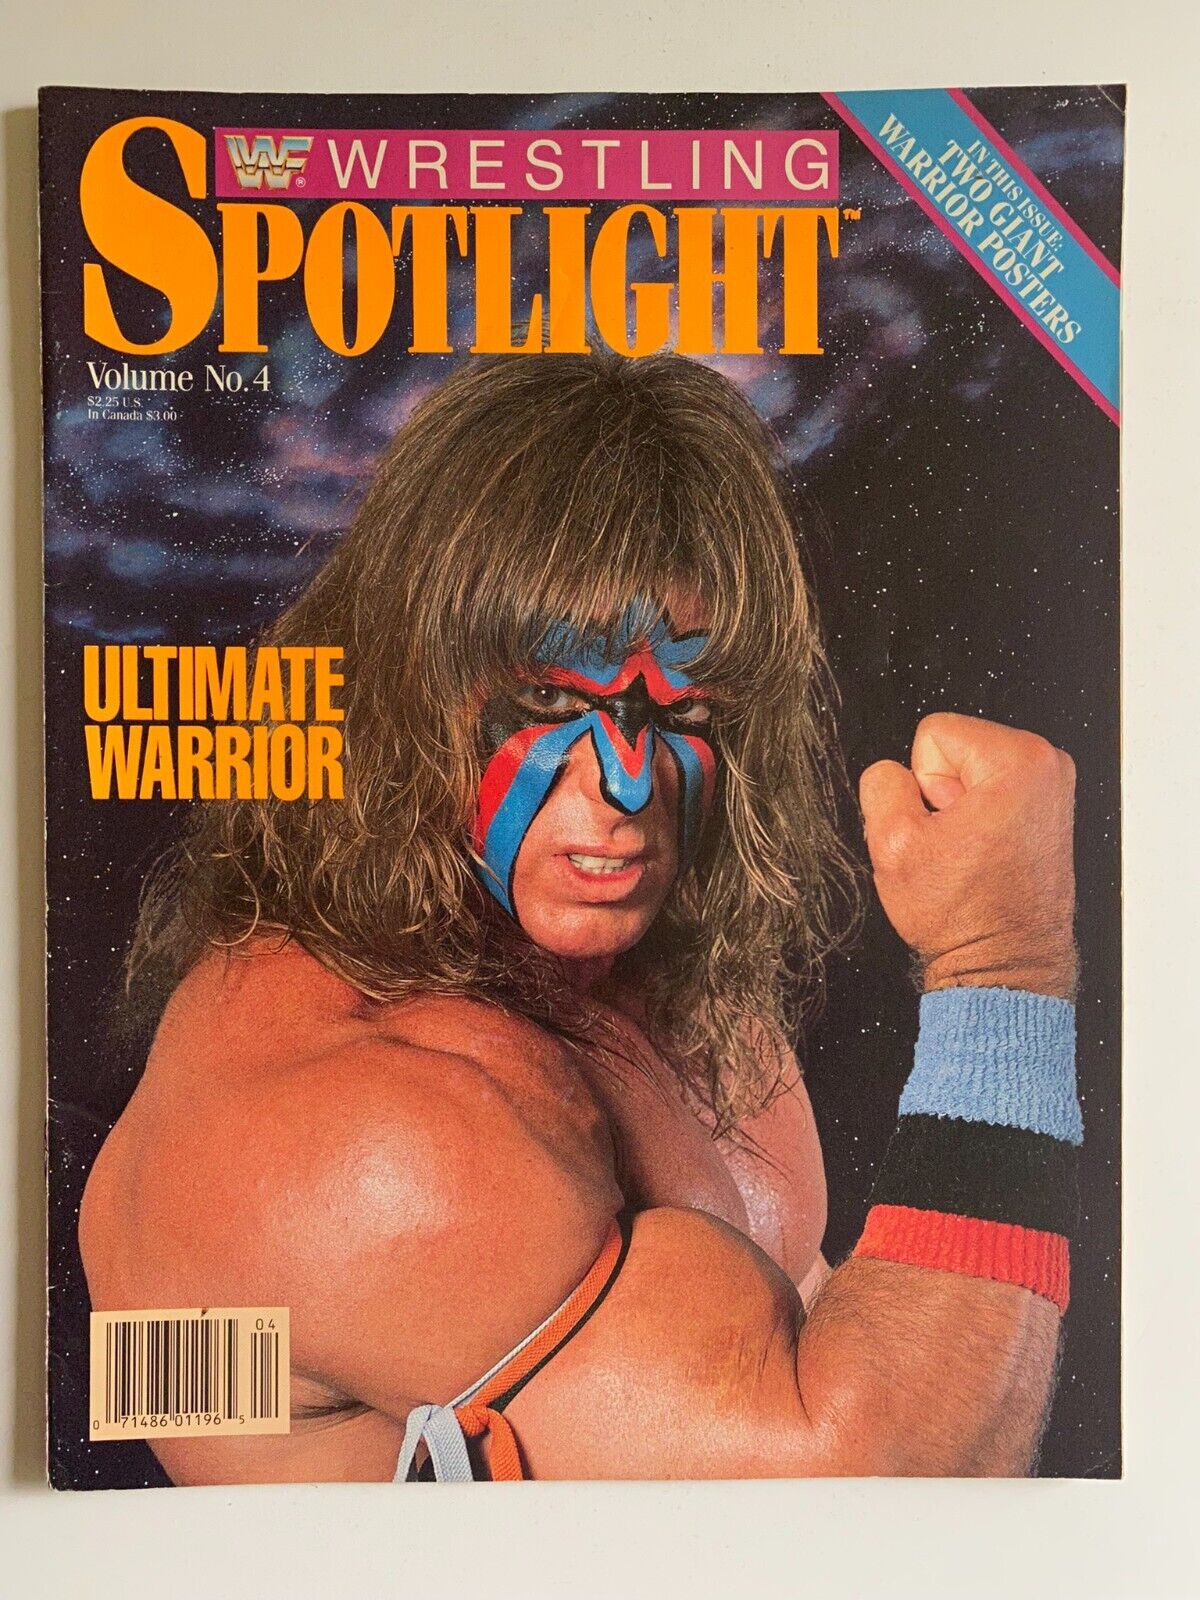 WWE WWF Wrestling Spotlight Volume 4 Ultimate Warrior Magazine 1989